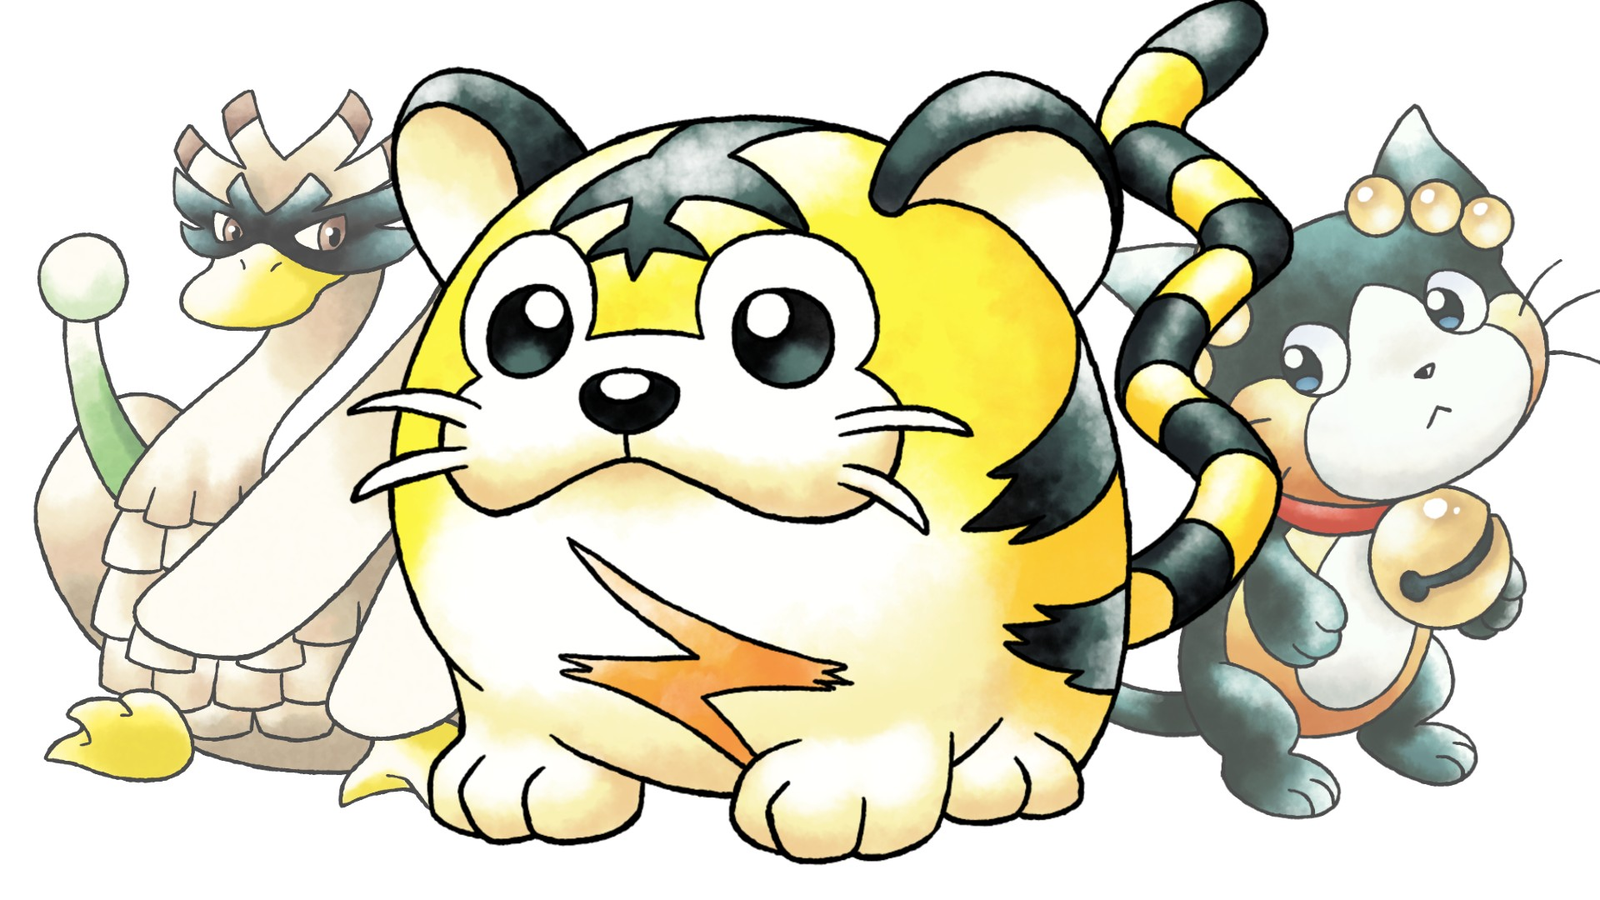 Pokémon Lightning Yellow ROM - Nintendo GBA